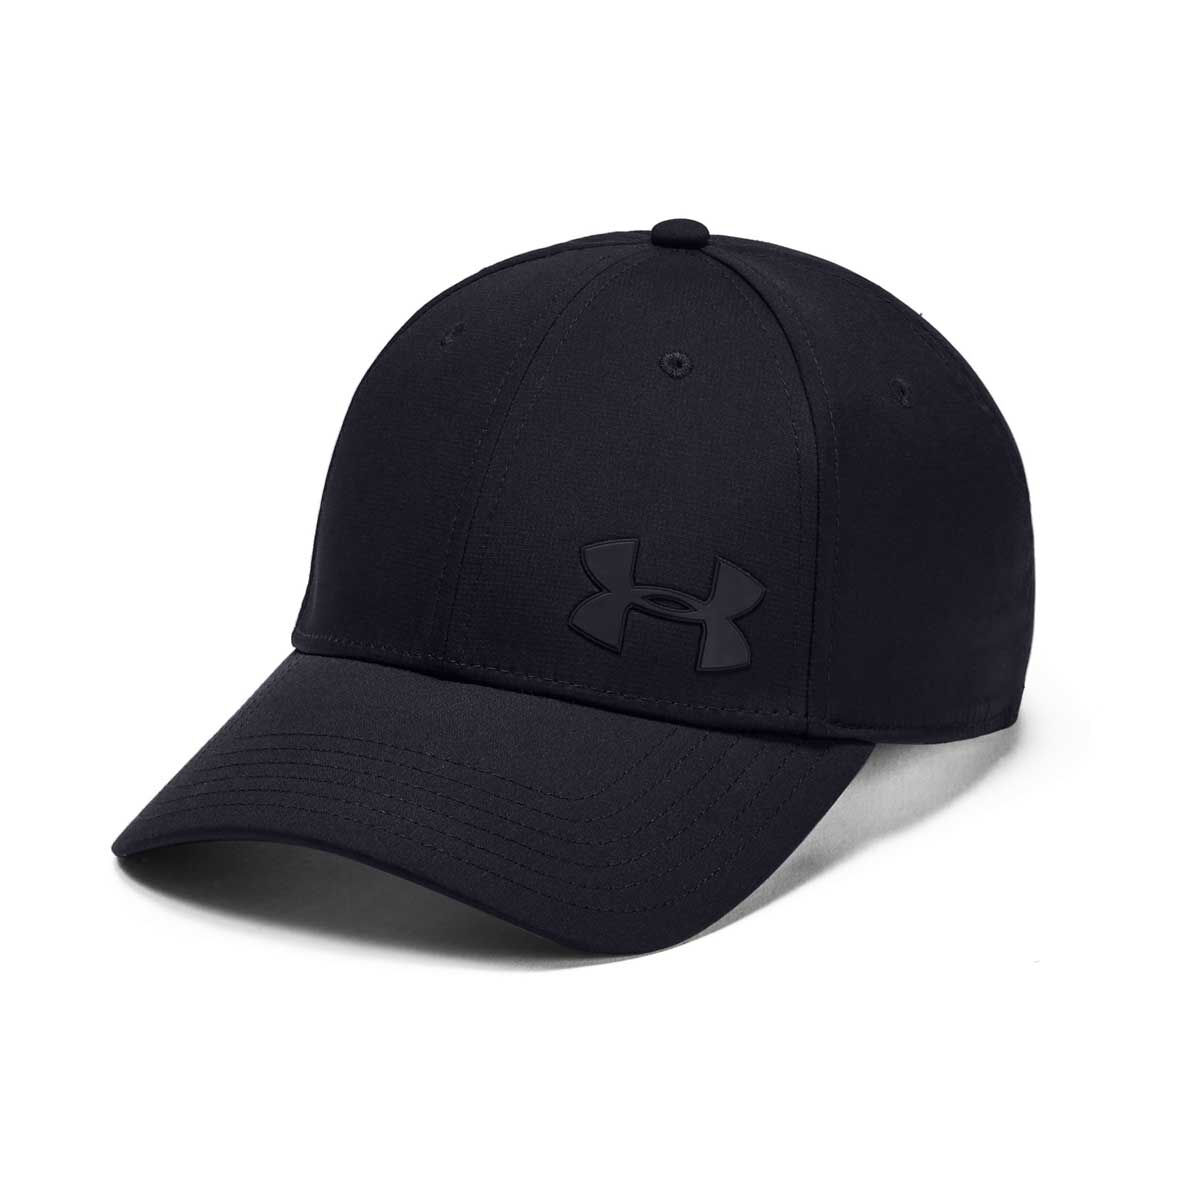 under armour black baseball cap